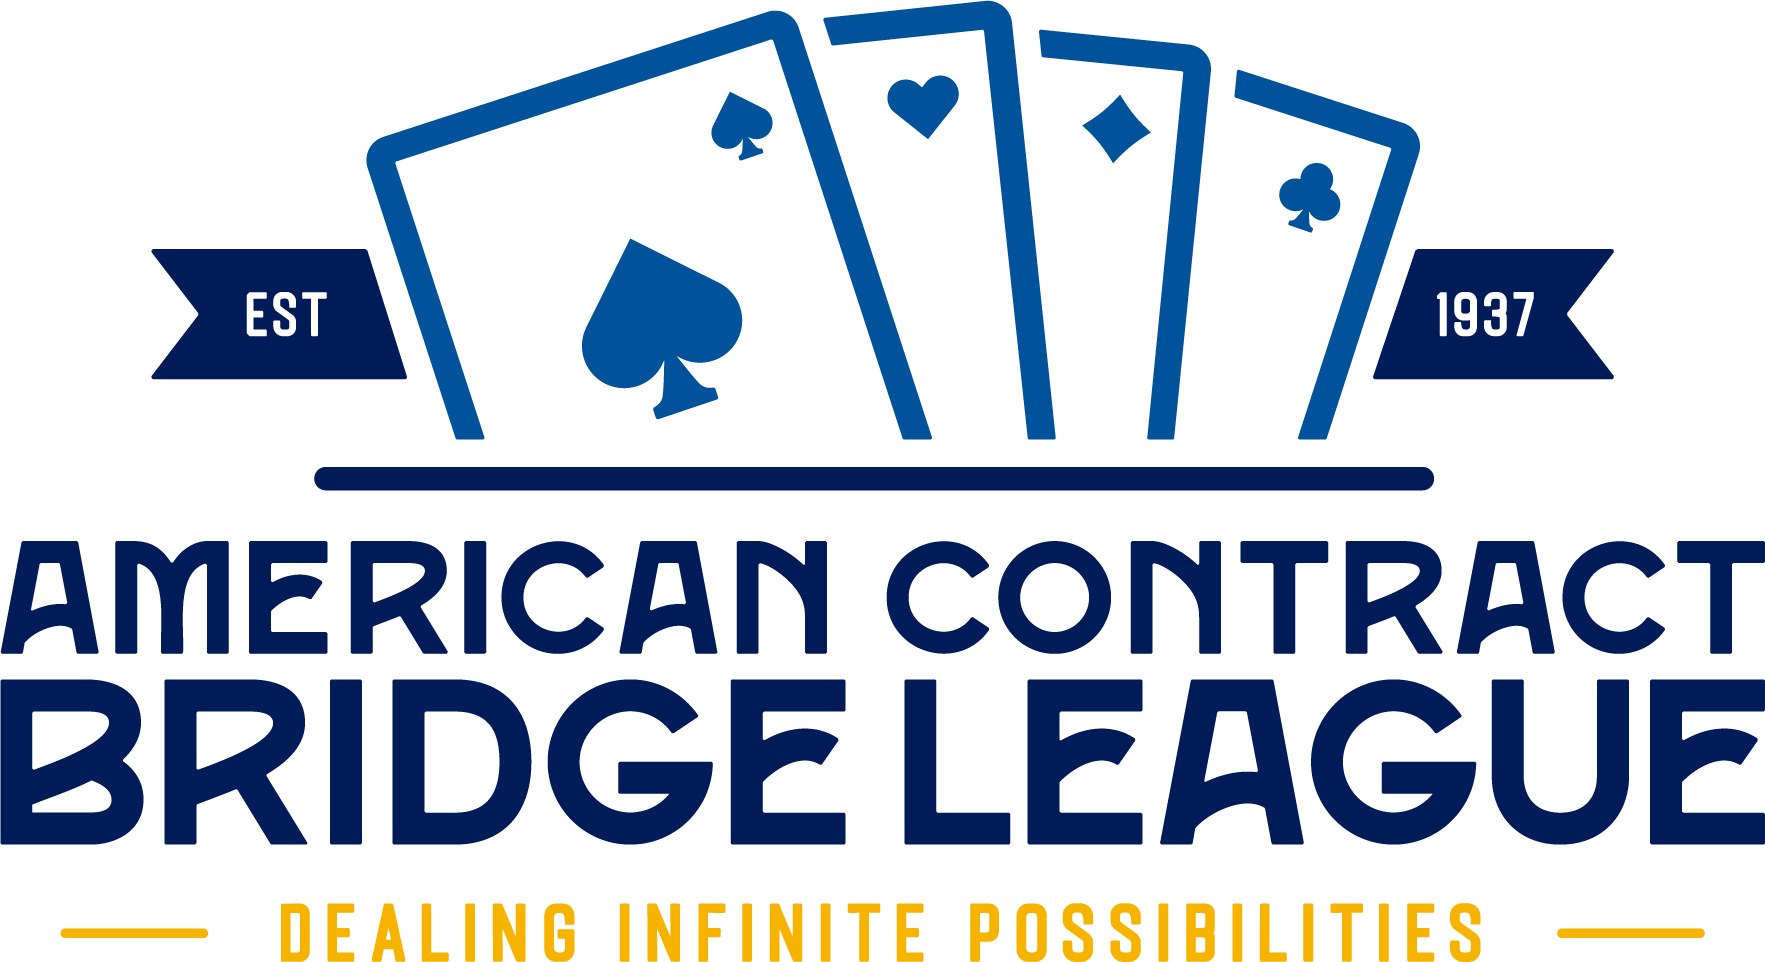 Learn • American Contract Bridge League